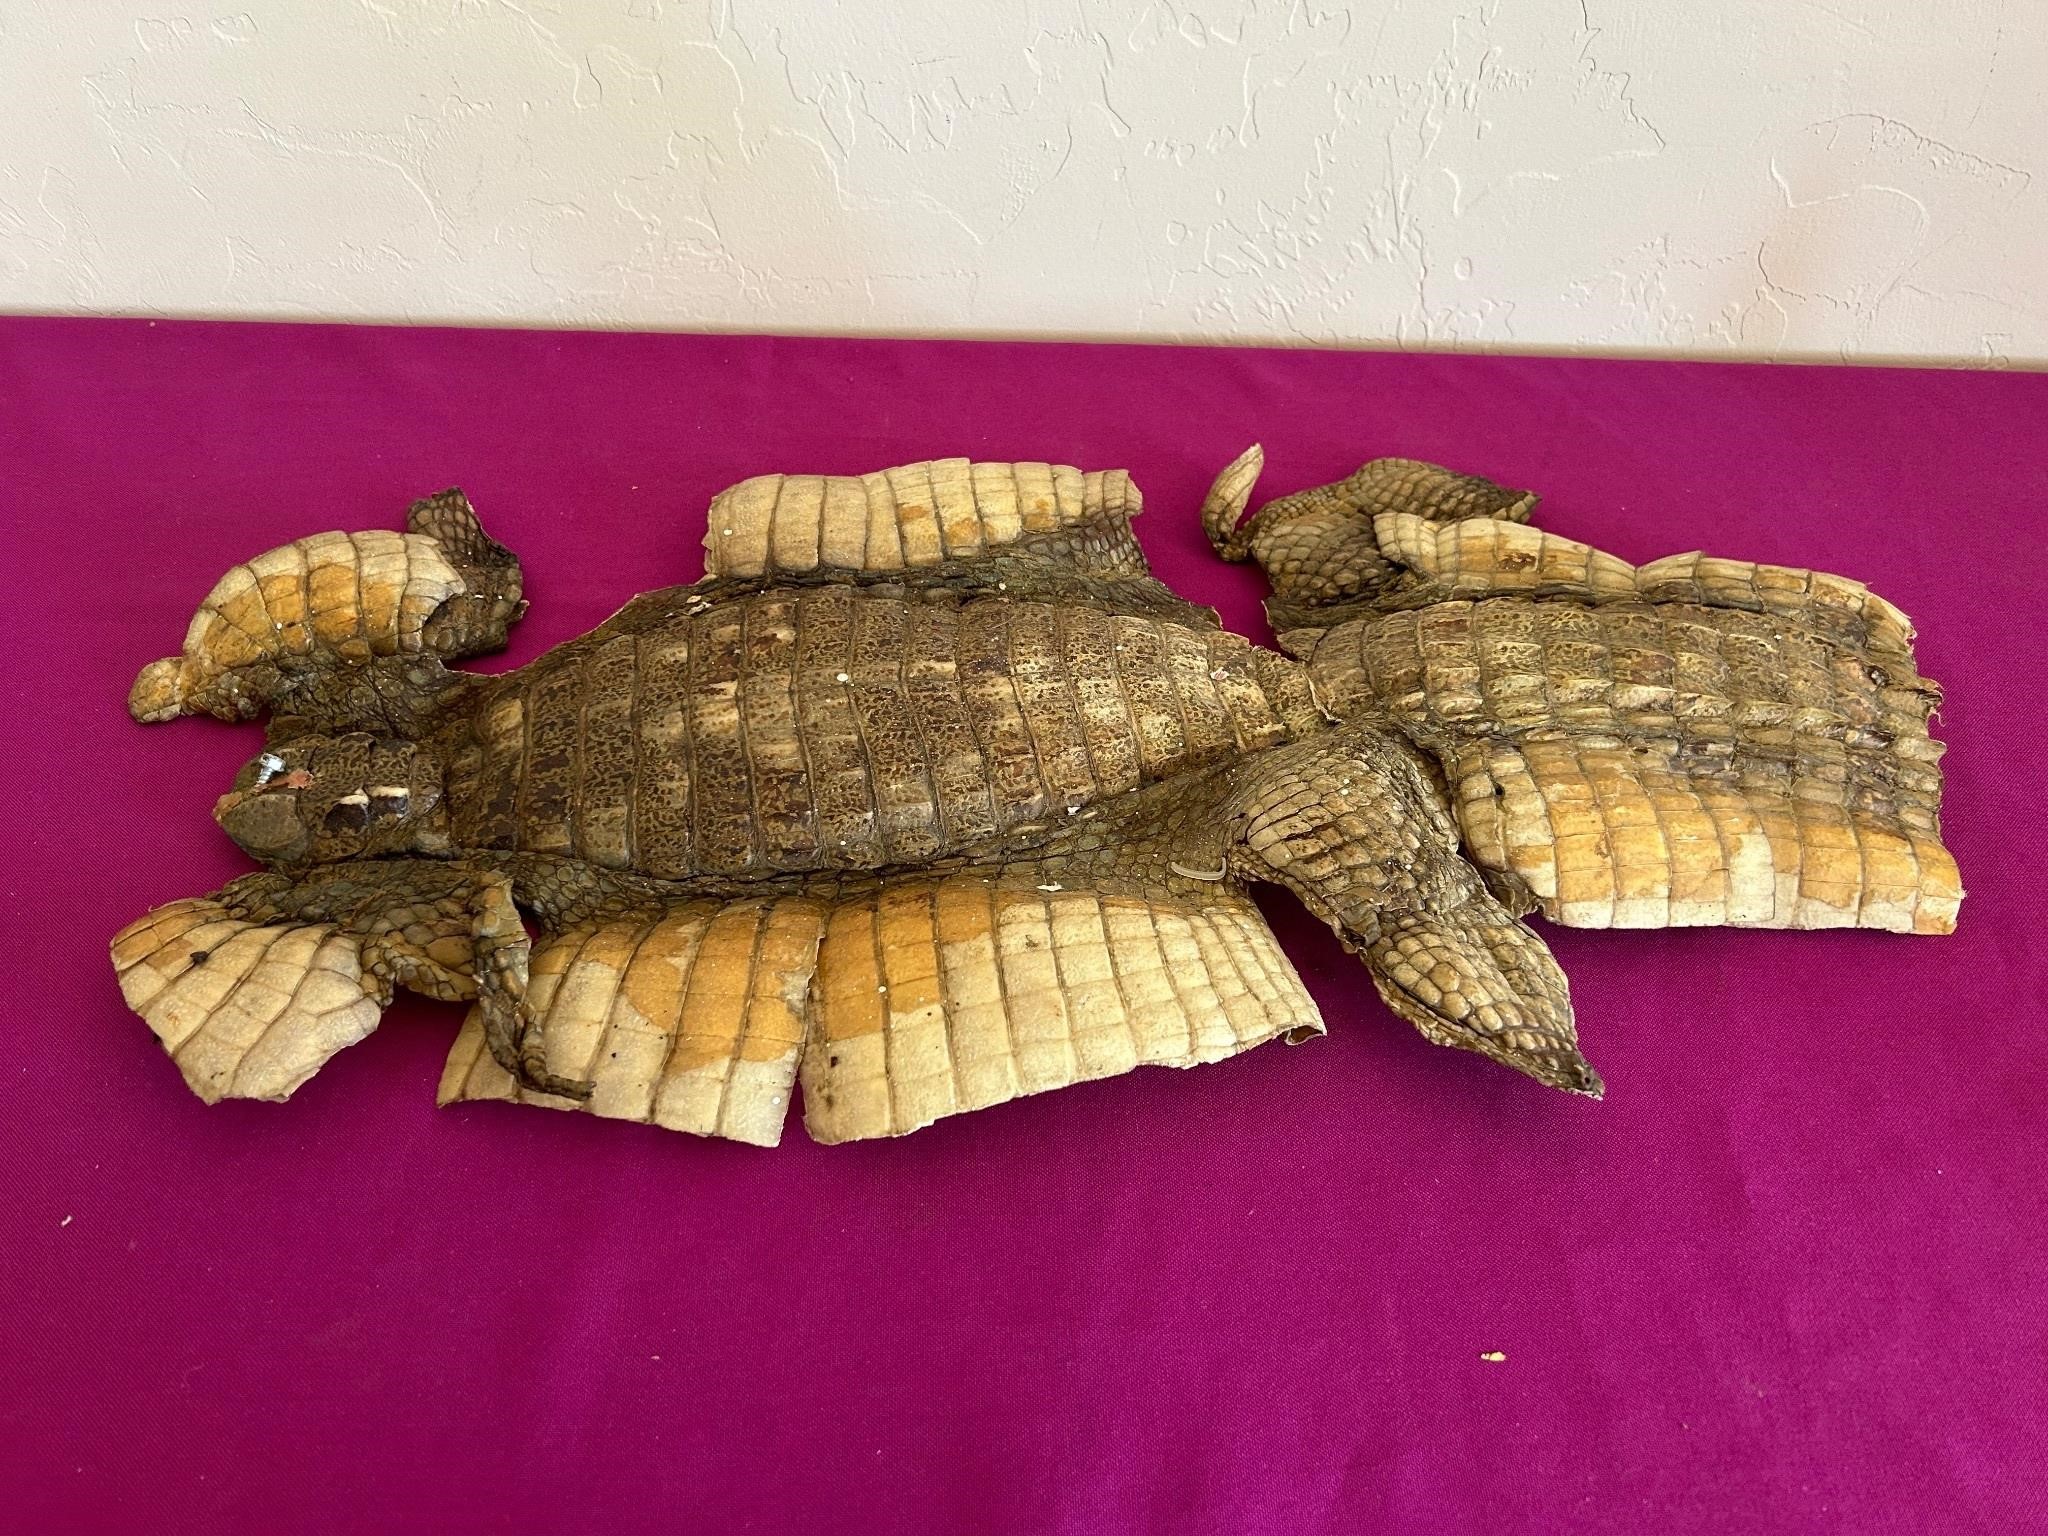 Gator or Crocodile Skin Exoskeleton